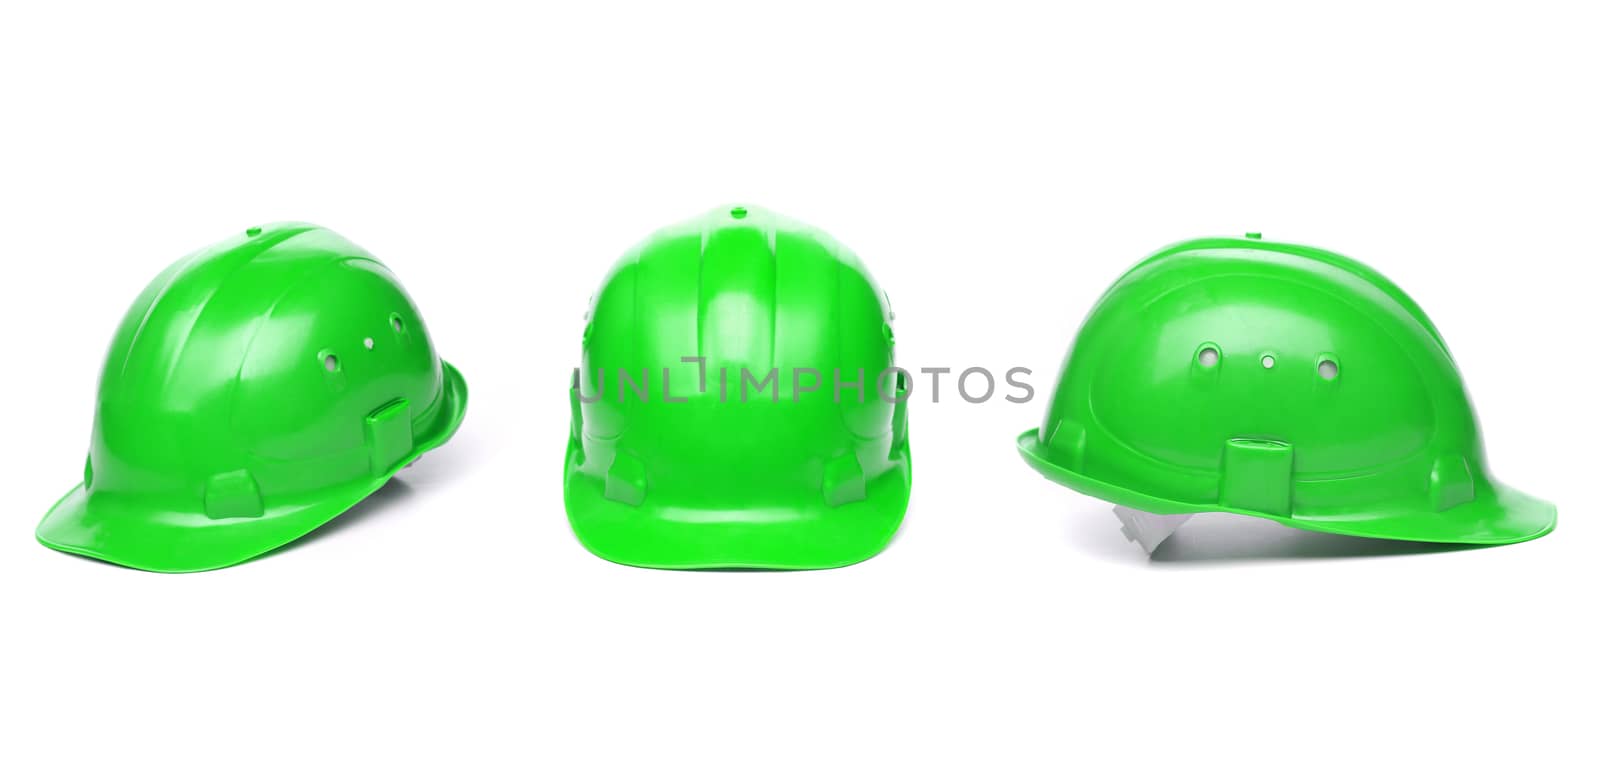 Three identical green hard hat. by indigolotos